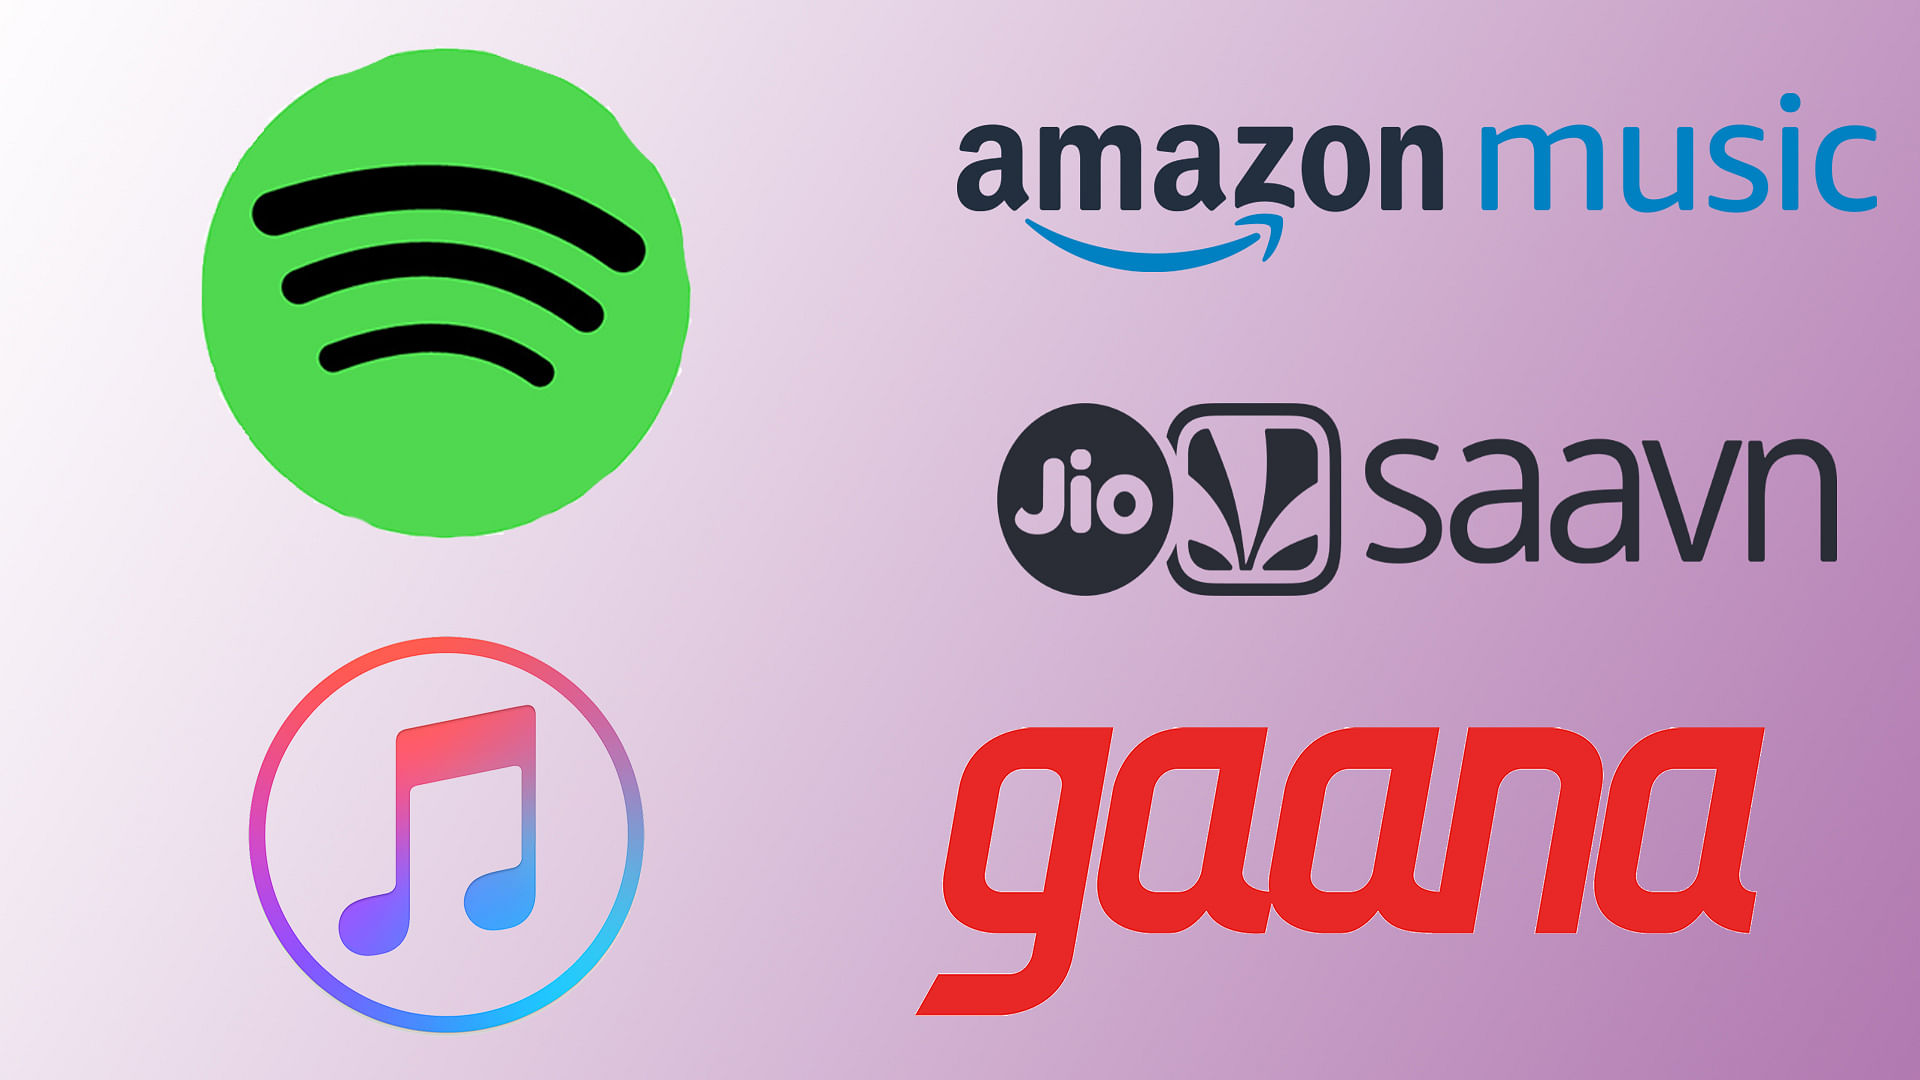 Amazon Music Vs Gaana Vs Jiosaavn Vs Spotify How The Apps Compare